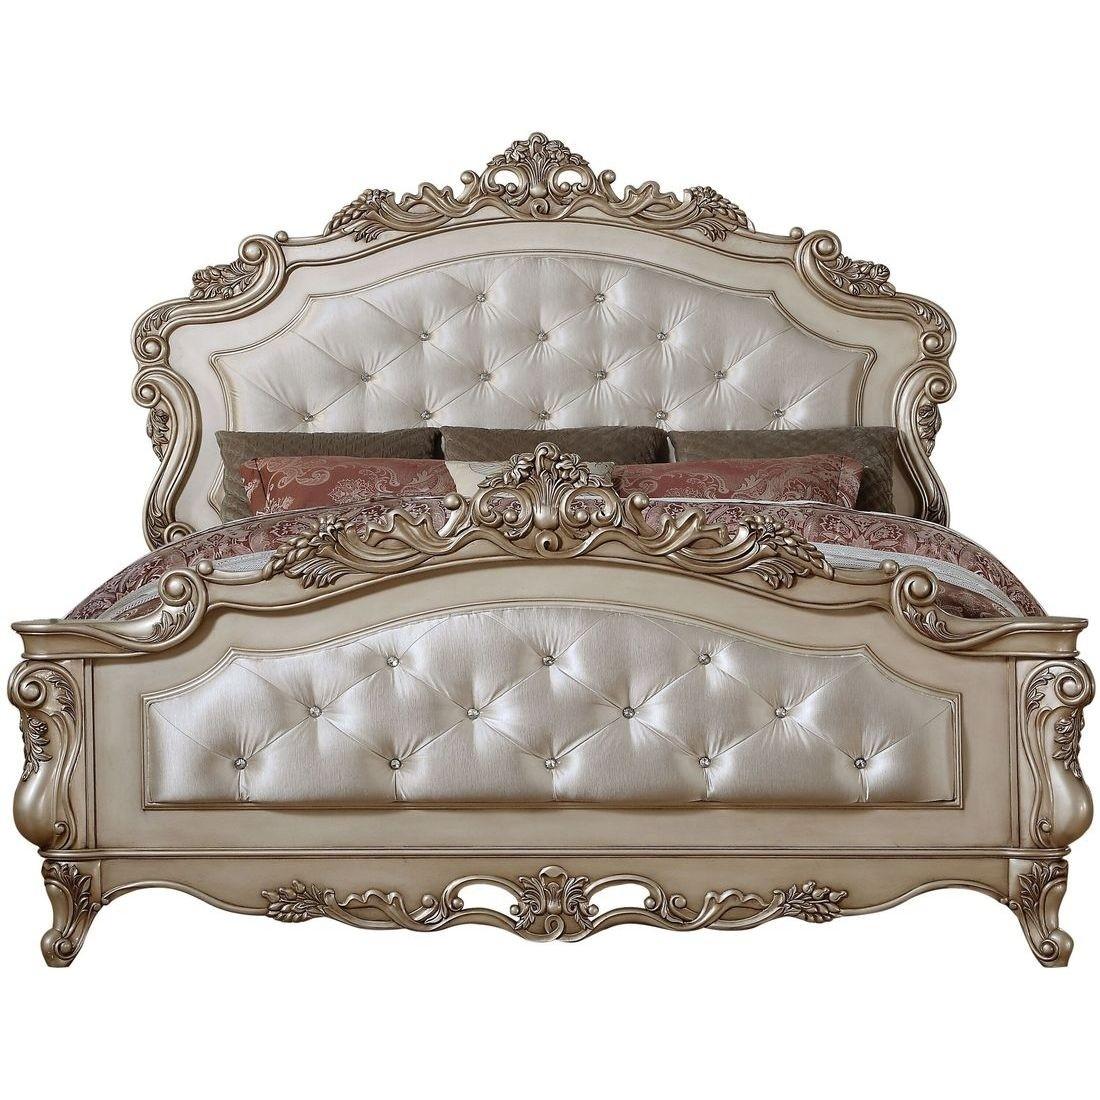 Classic, Traditional Panel Bed Gorsedd Gorsedd-27440Q in Antique White, Cream Fabric